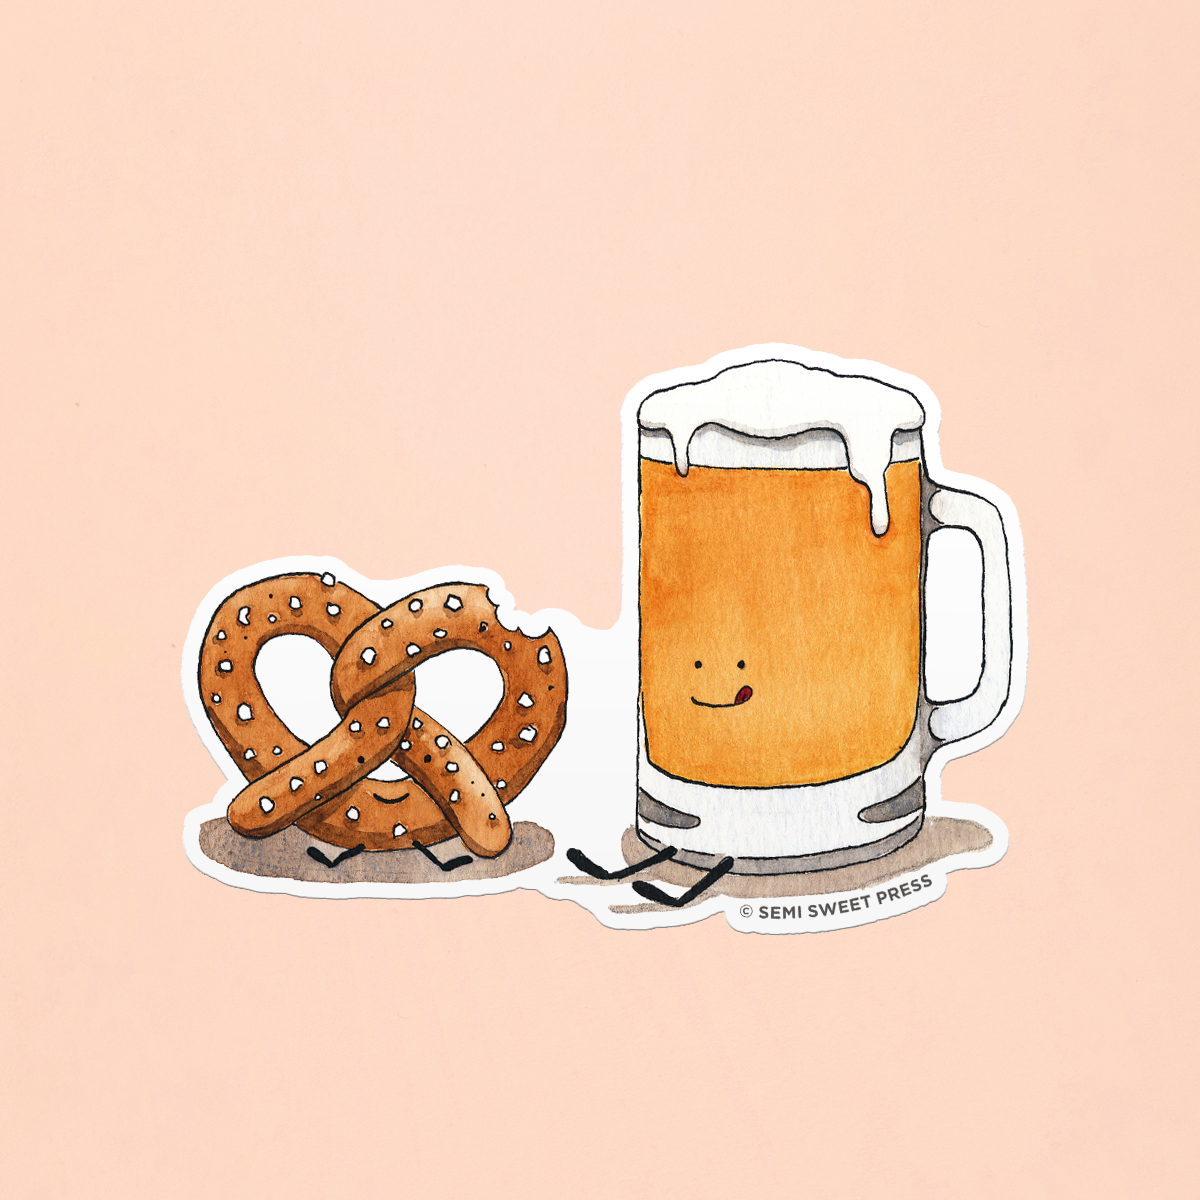 Beer and Pretzel sticker